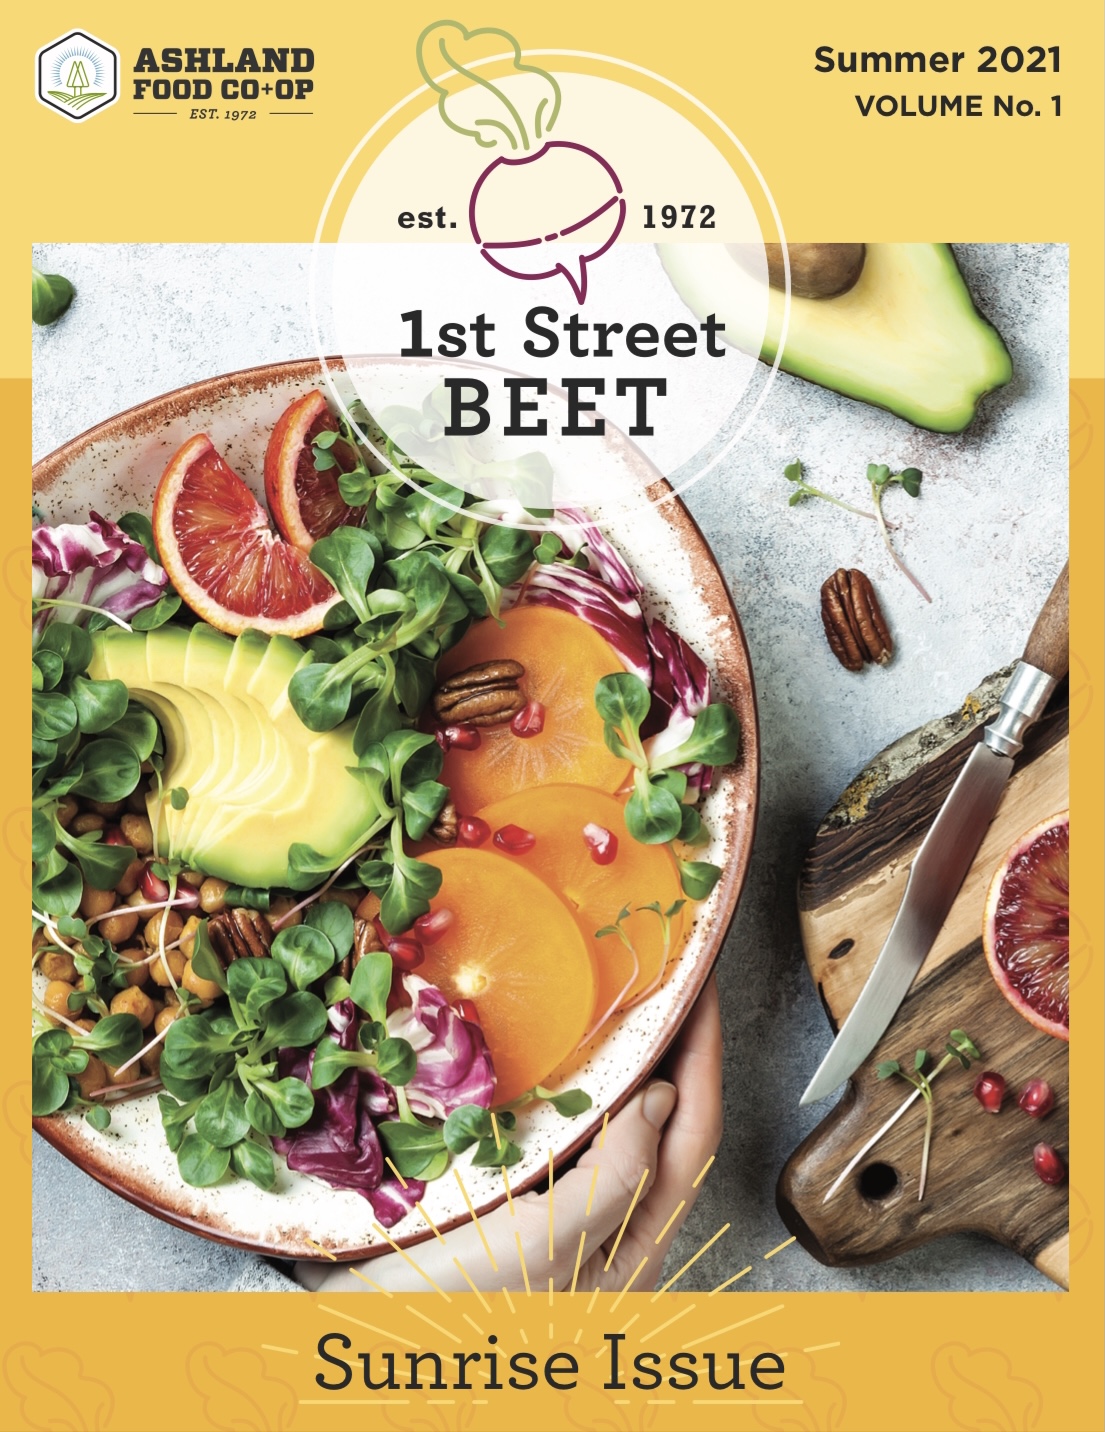 1st Street Beet Sunrise Issue Summer 2021 Volume No. 1